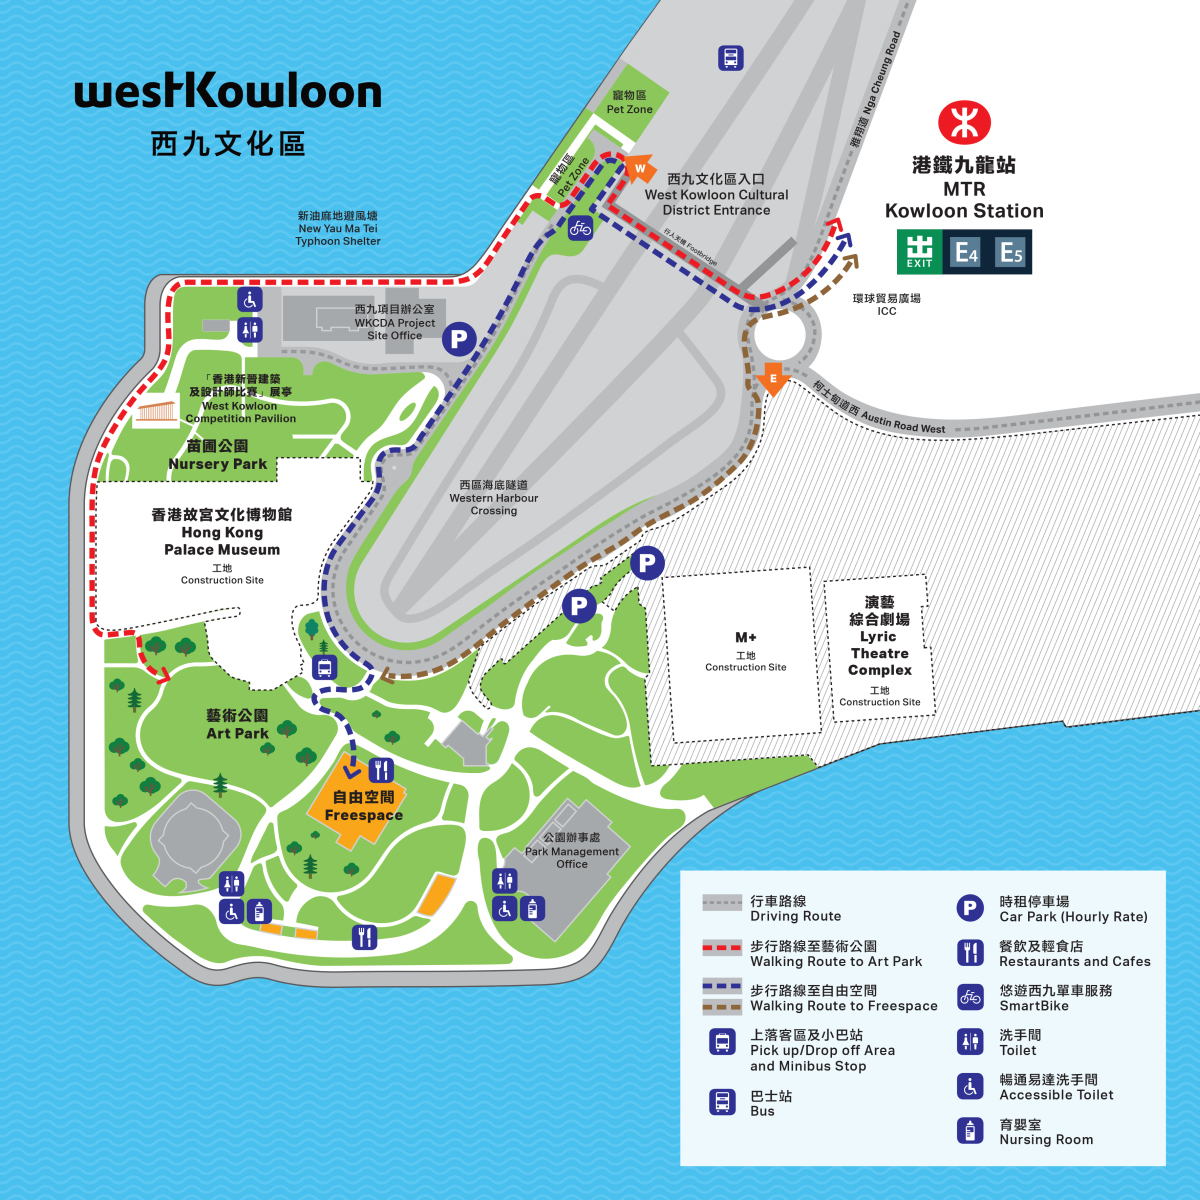 WestKowloon's Map